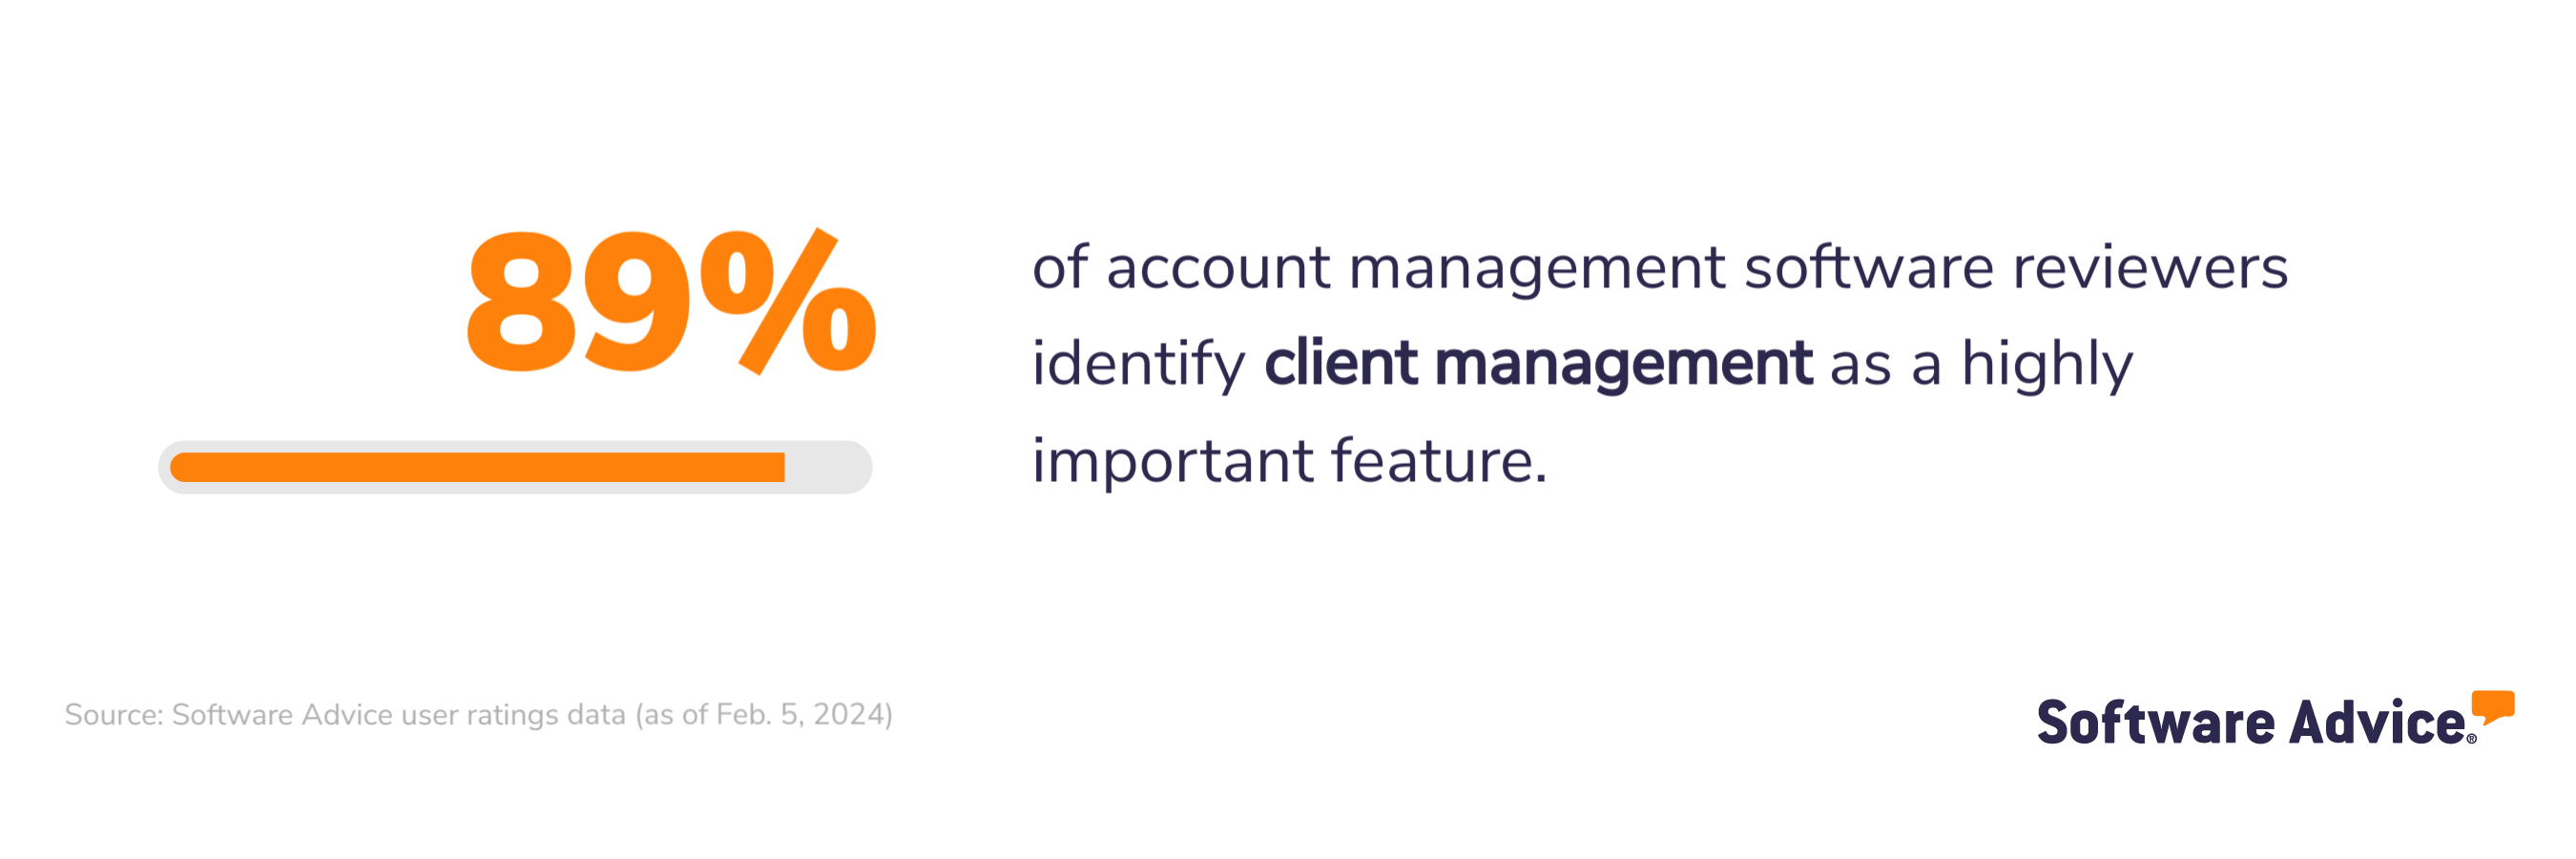 Client management feature of account management software